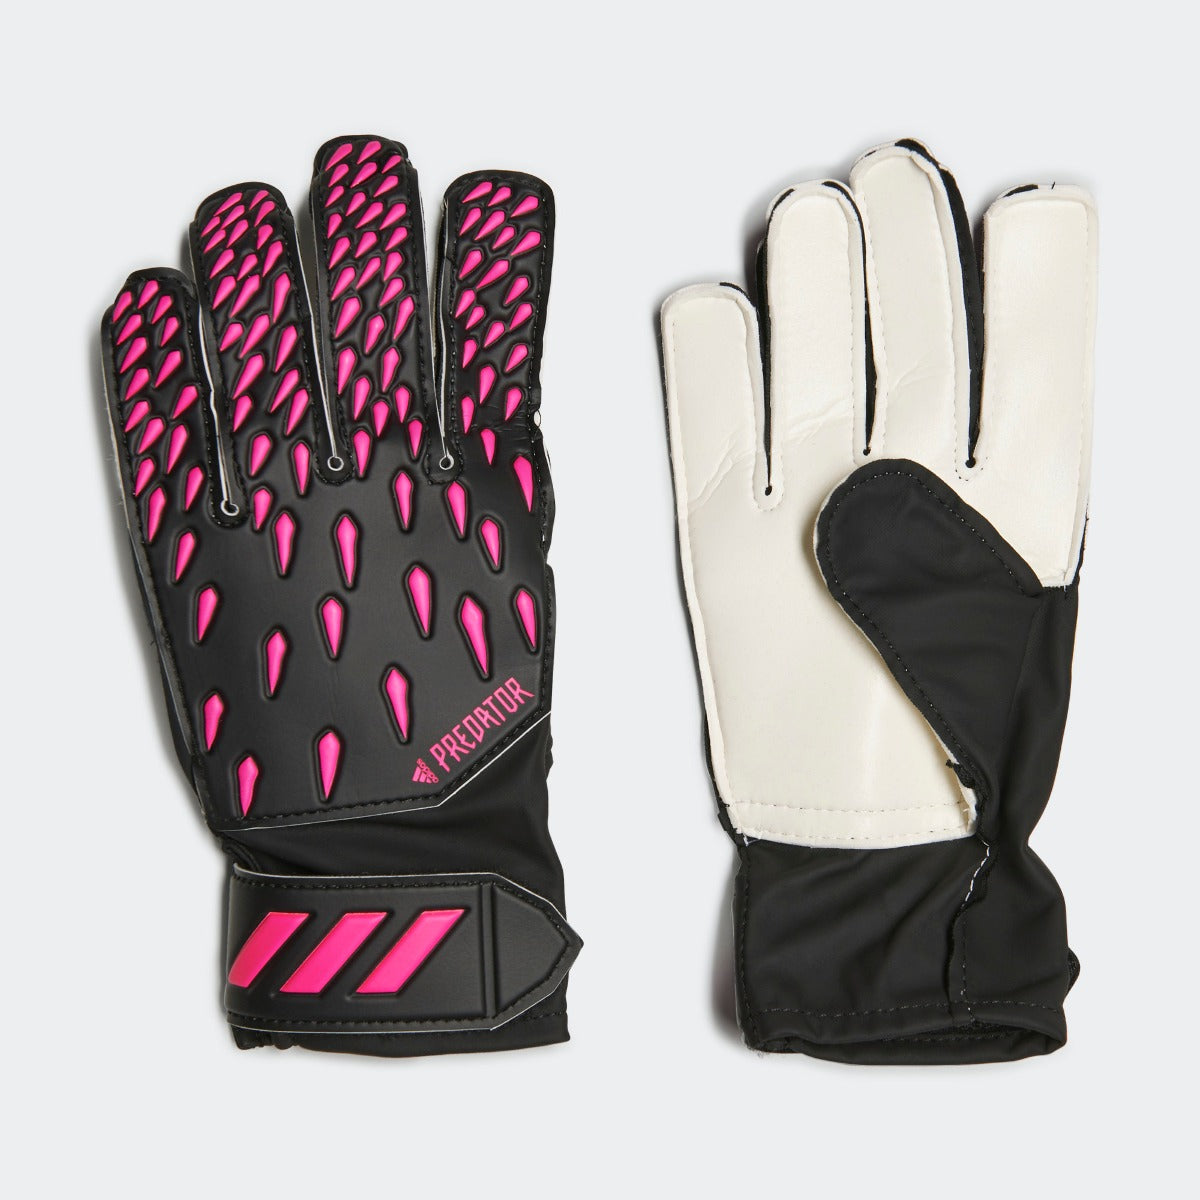 Adidas Predator Youth Training Goalkeeper Gloves  - Black-Pink (Pair)